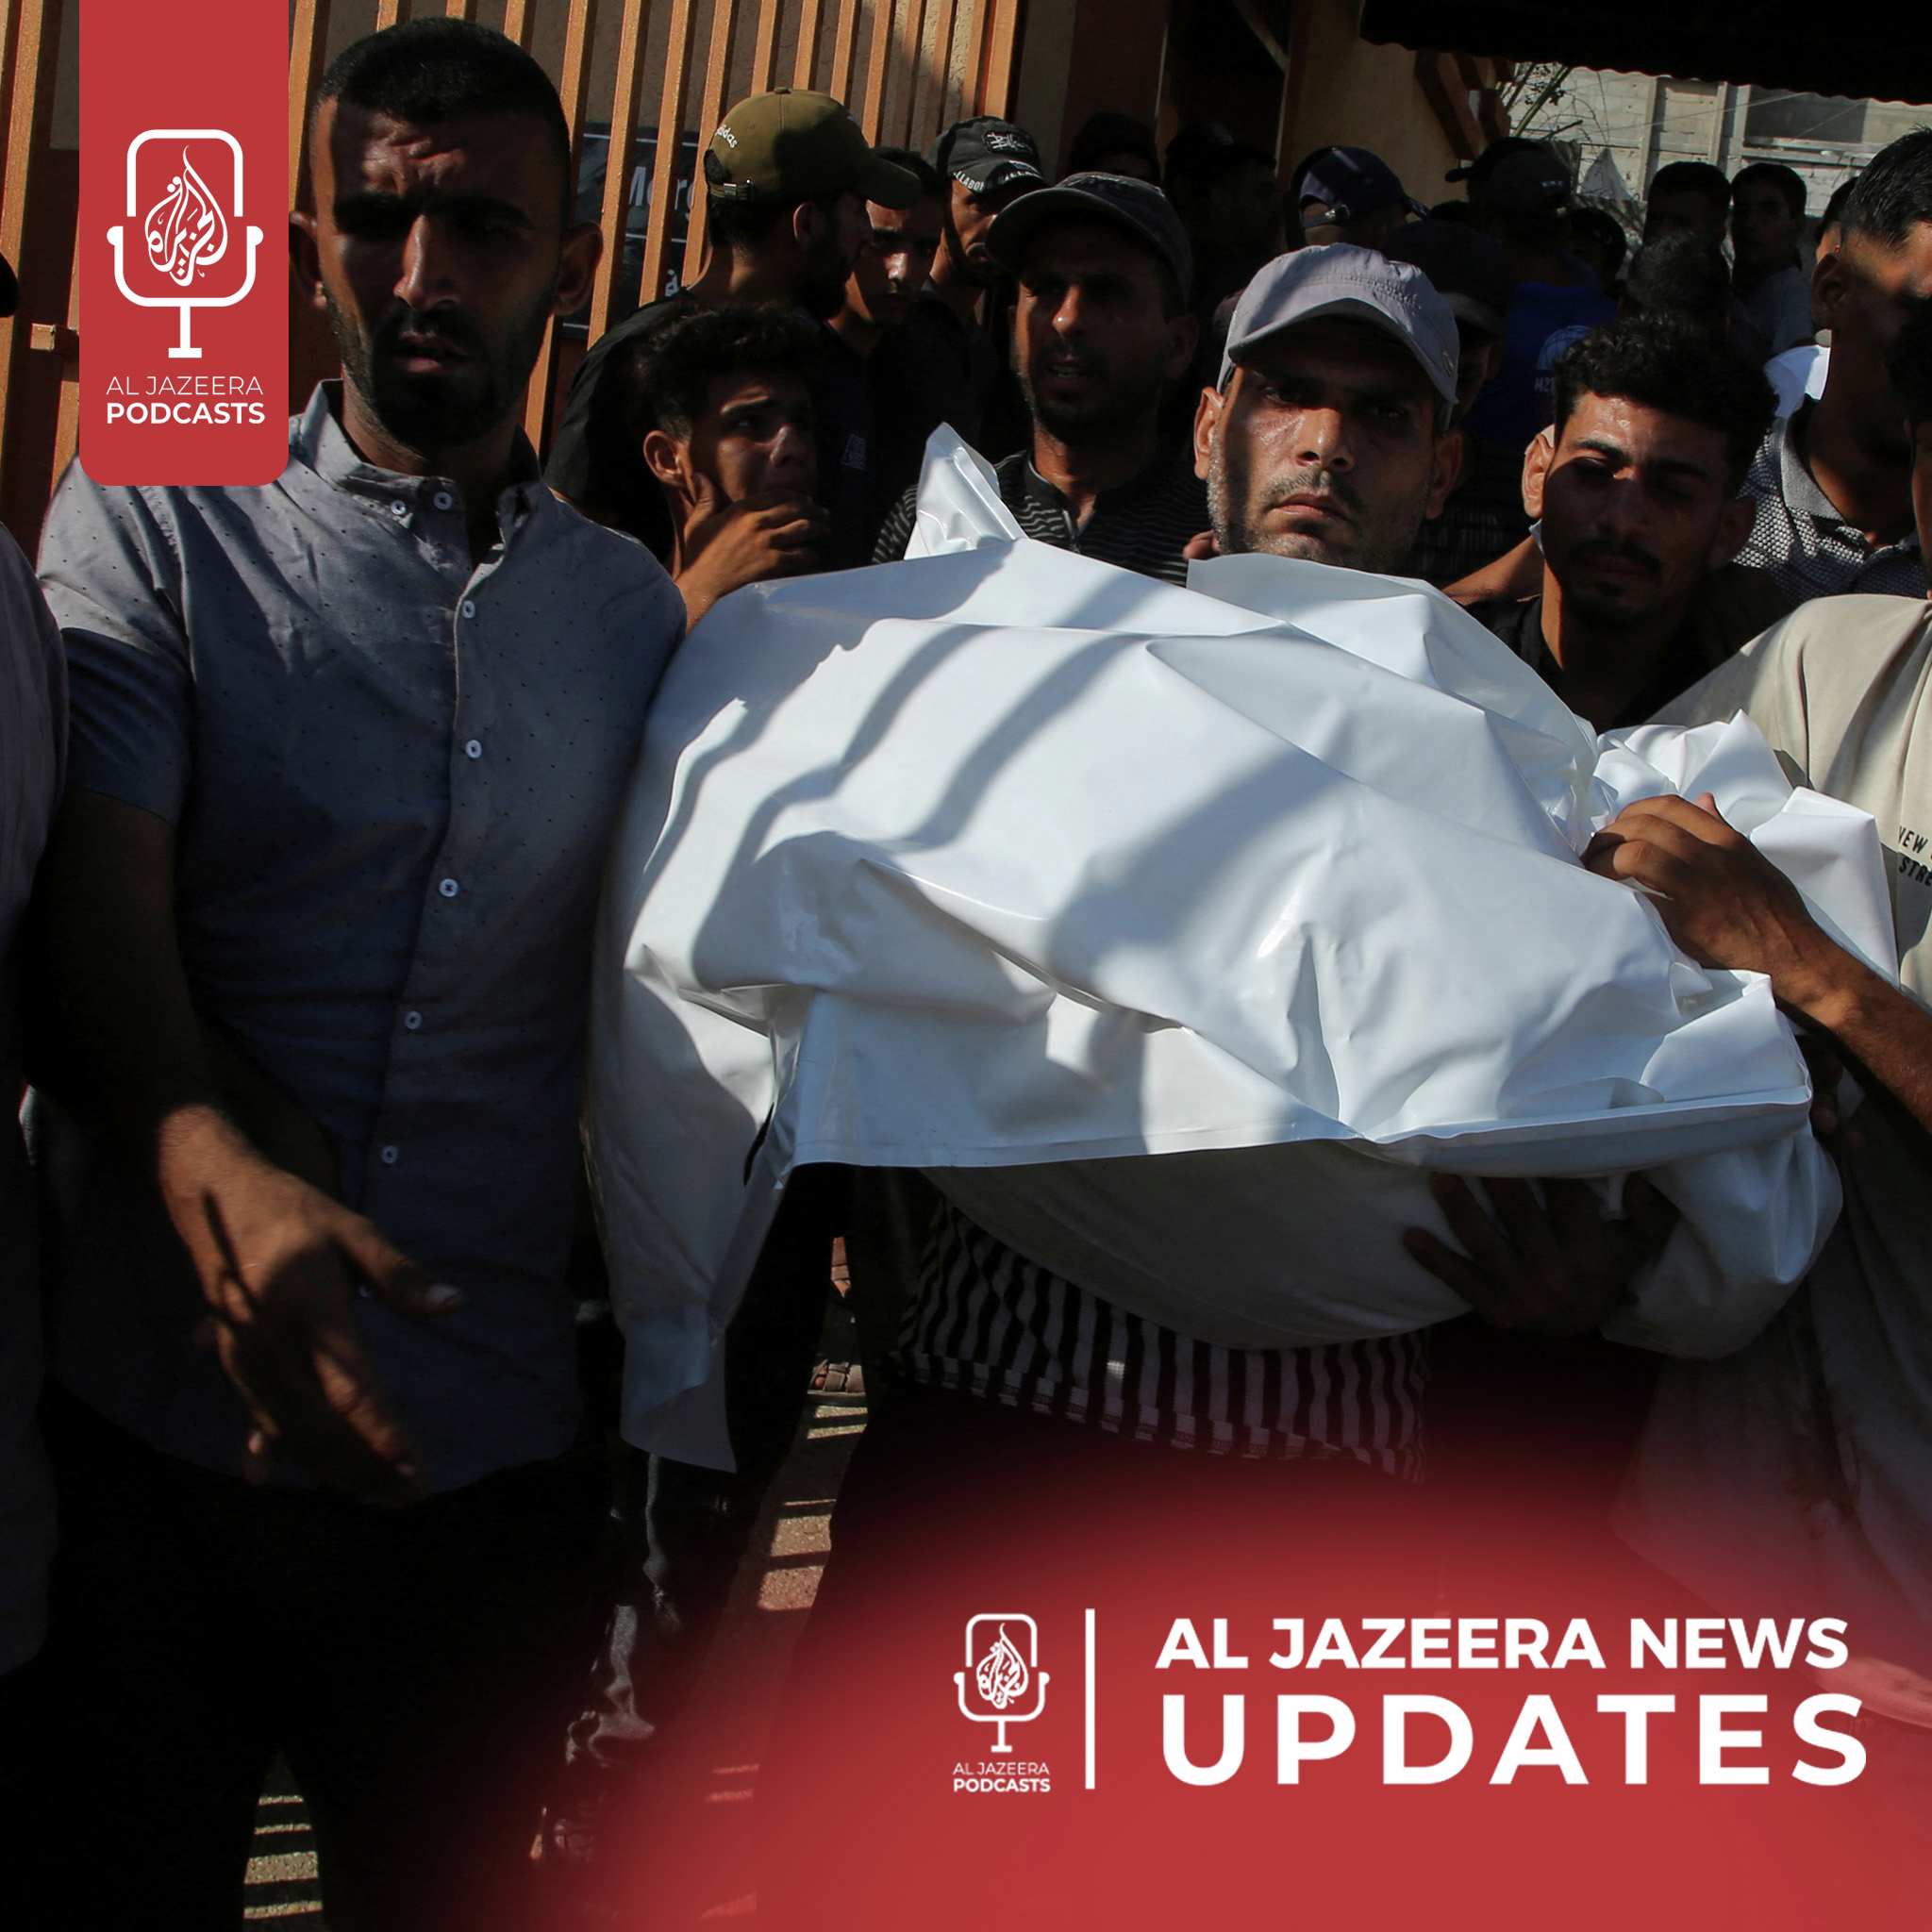 Israel kills at least 50 Palestinians in 24 hours, Ceasefire negotiations progress